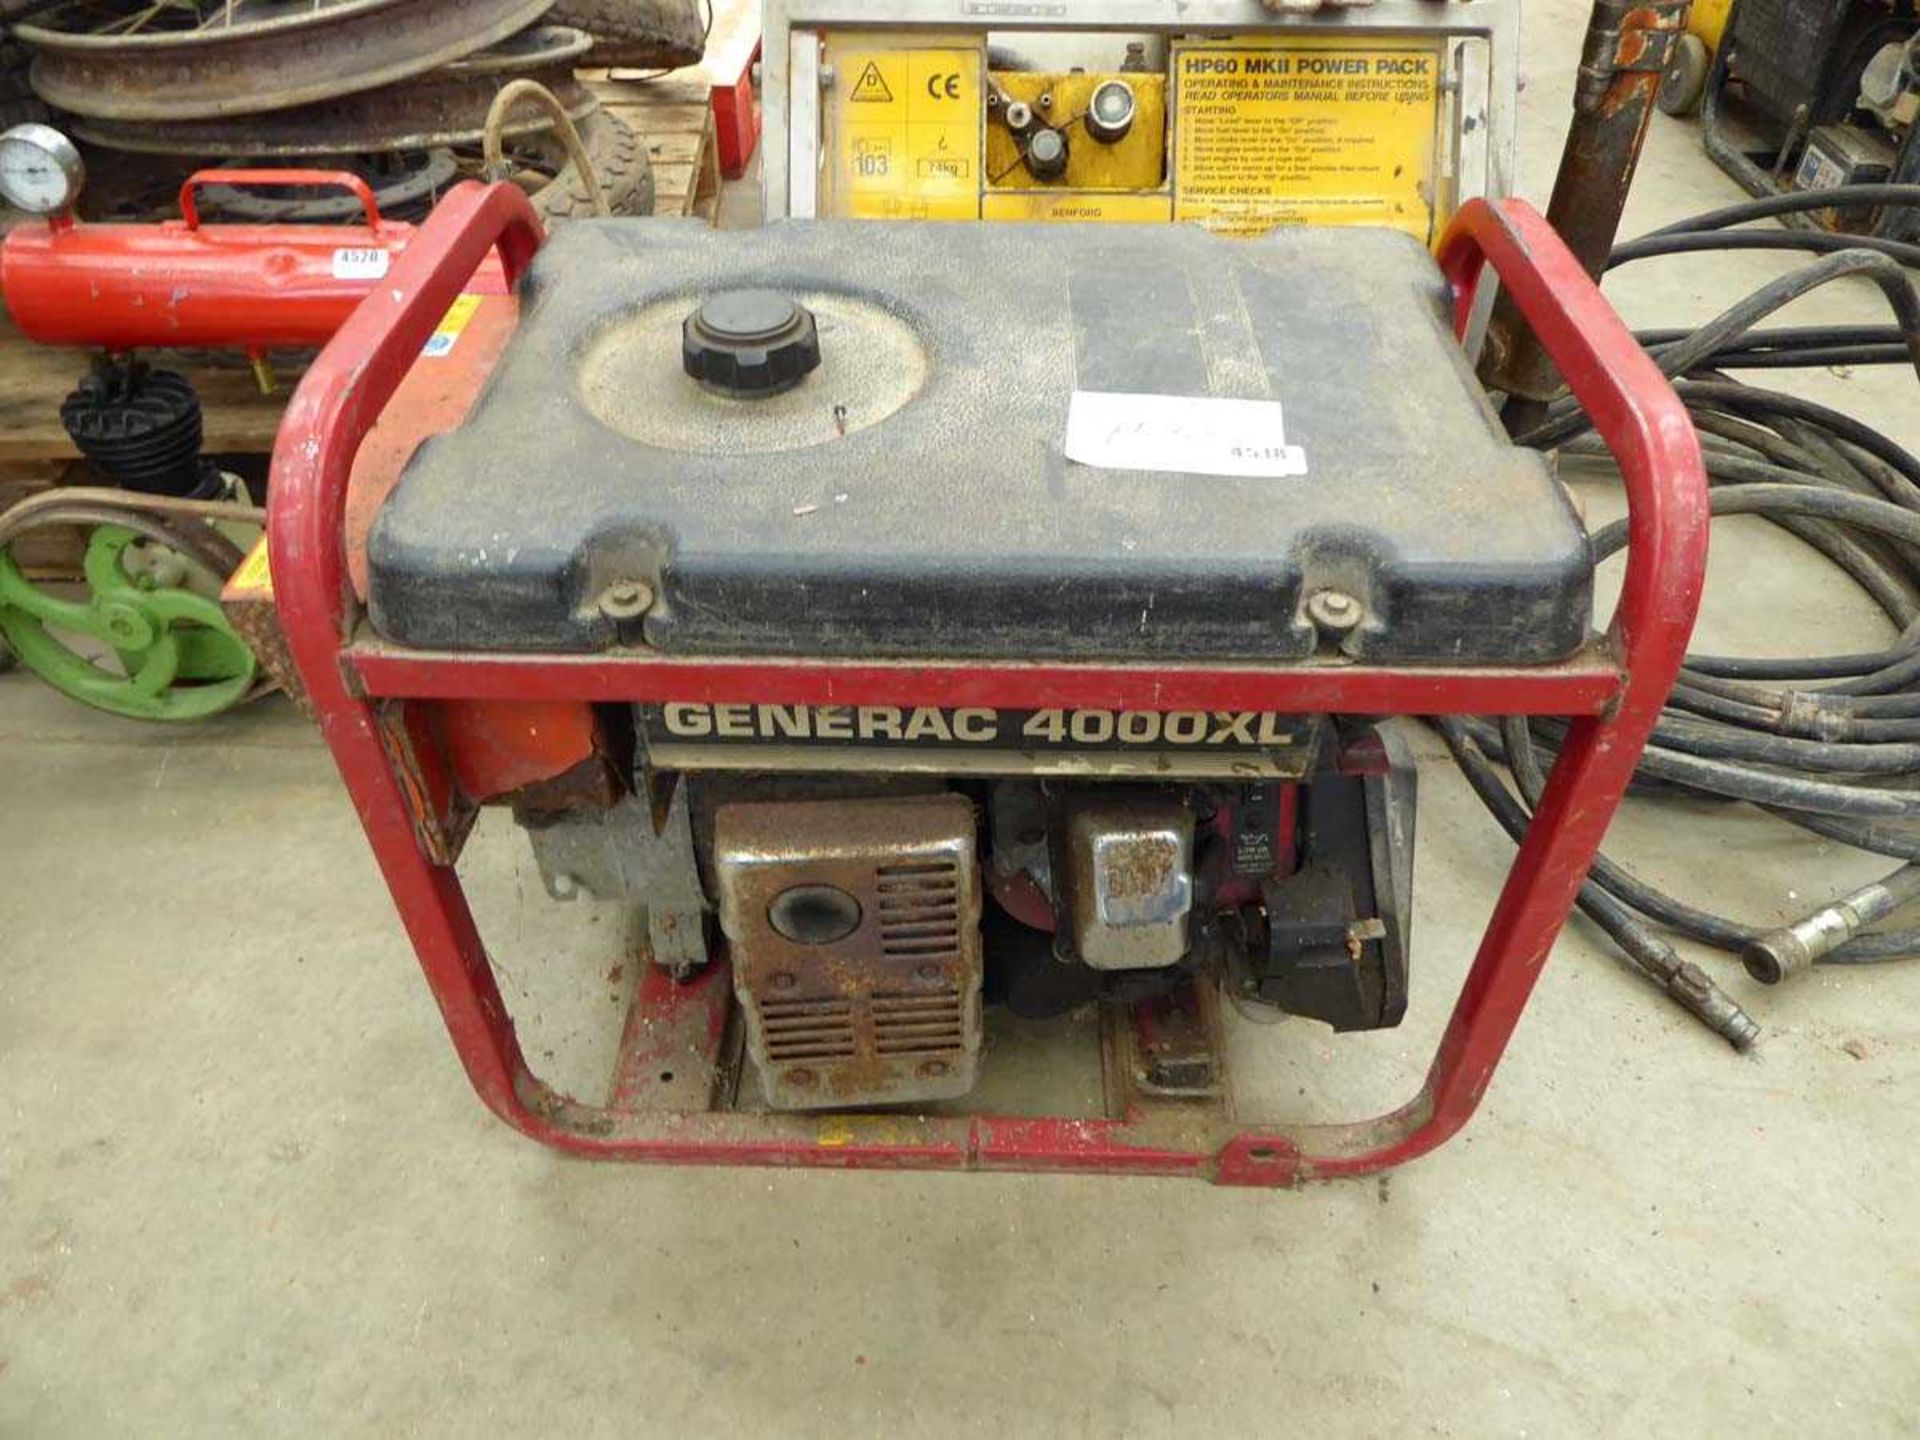 Red petrol powered generator